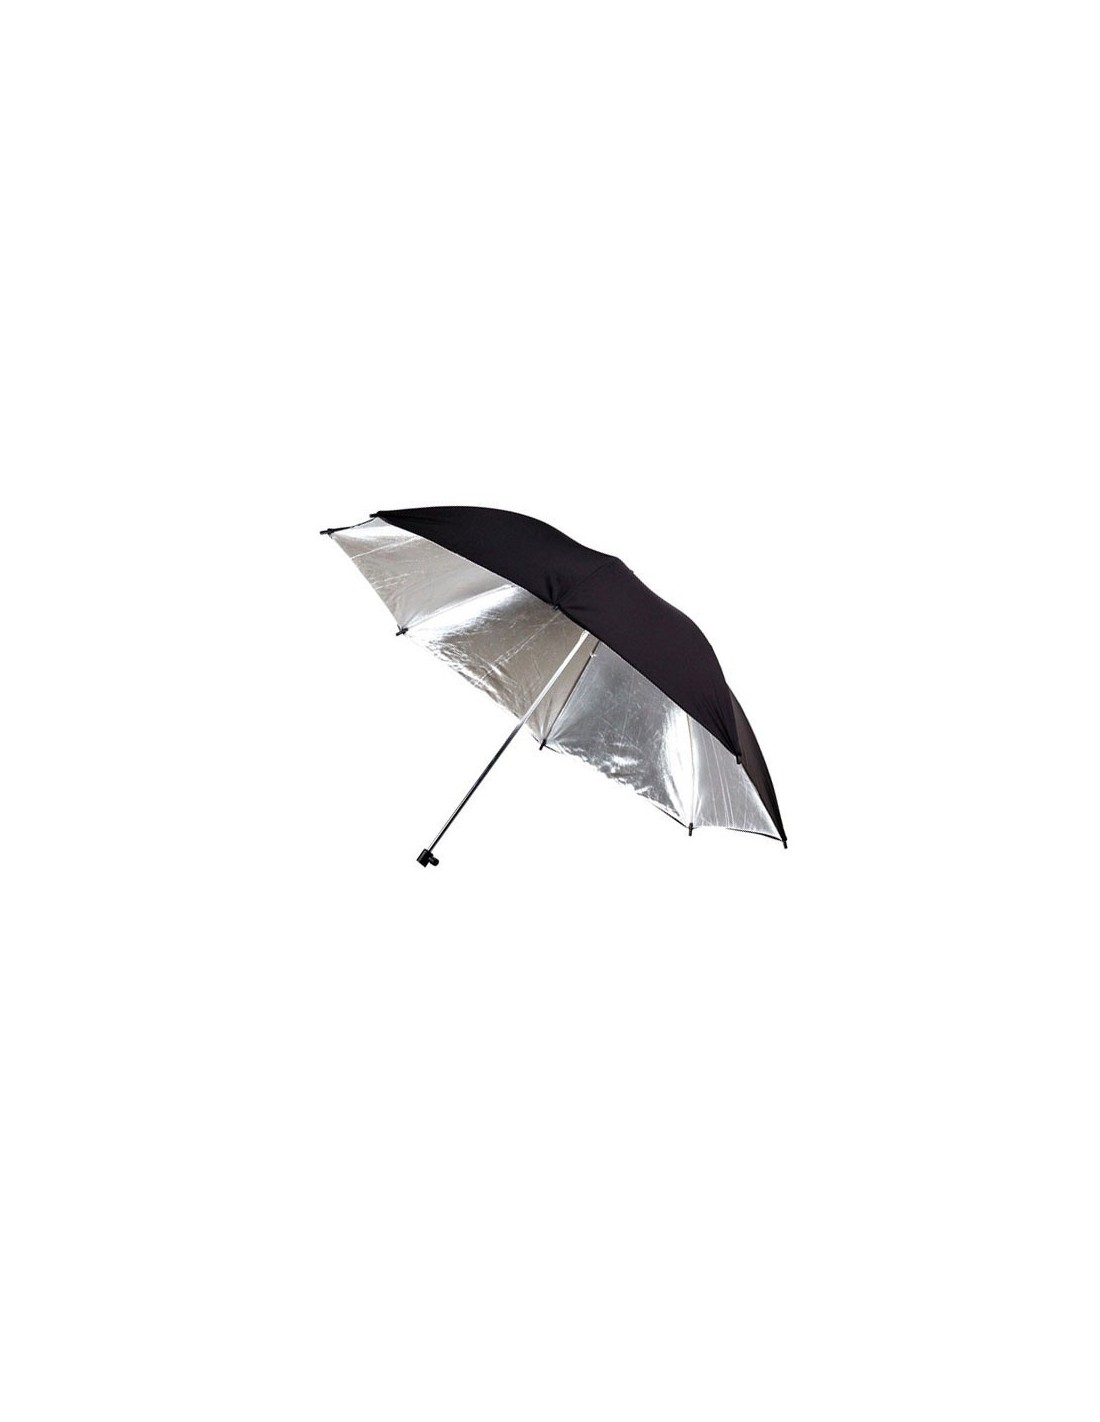 Paraguas Blanco Traslucido 110 cm de Diametro – FotoPlus